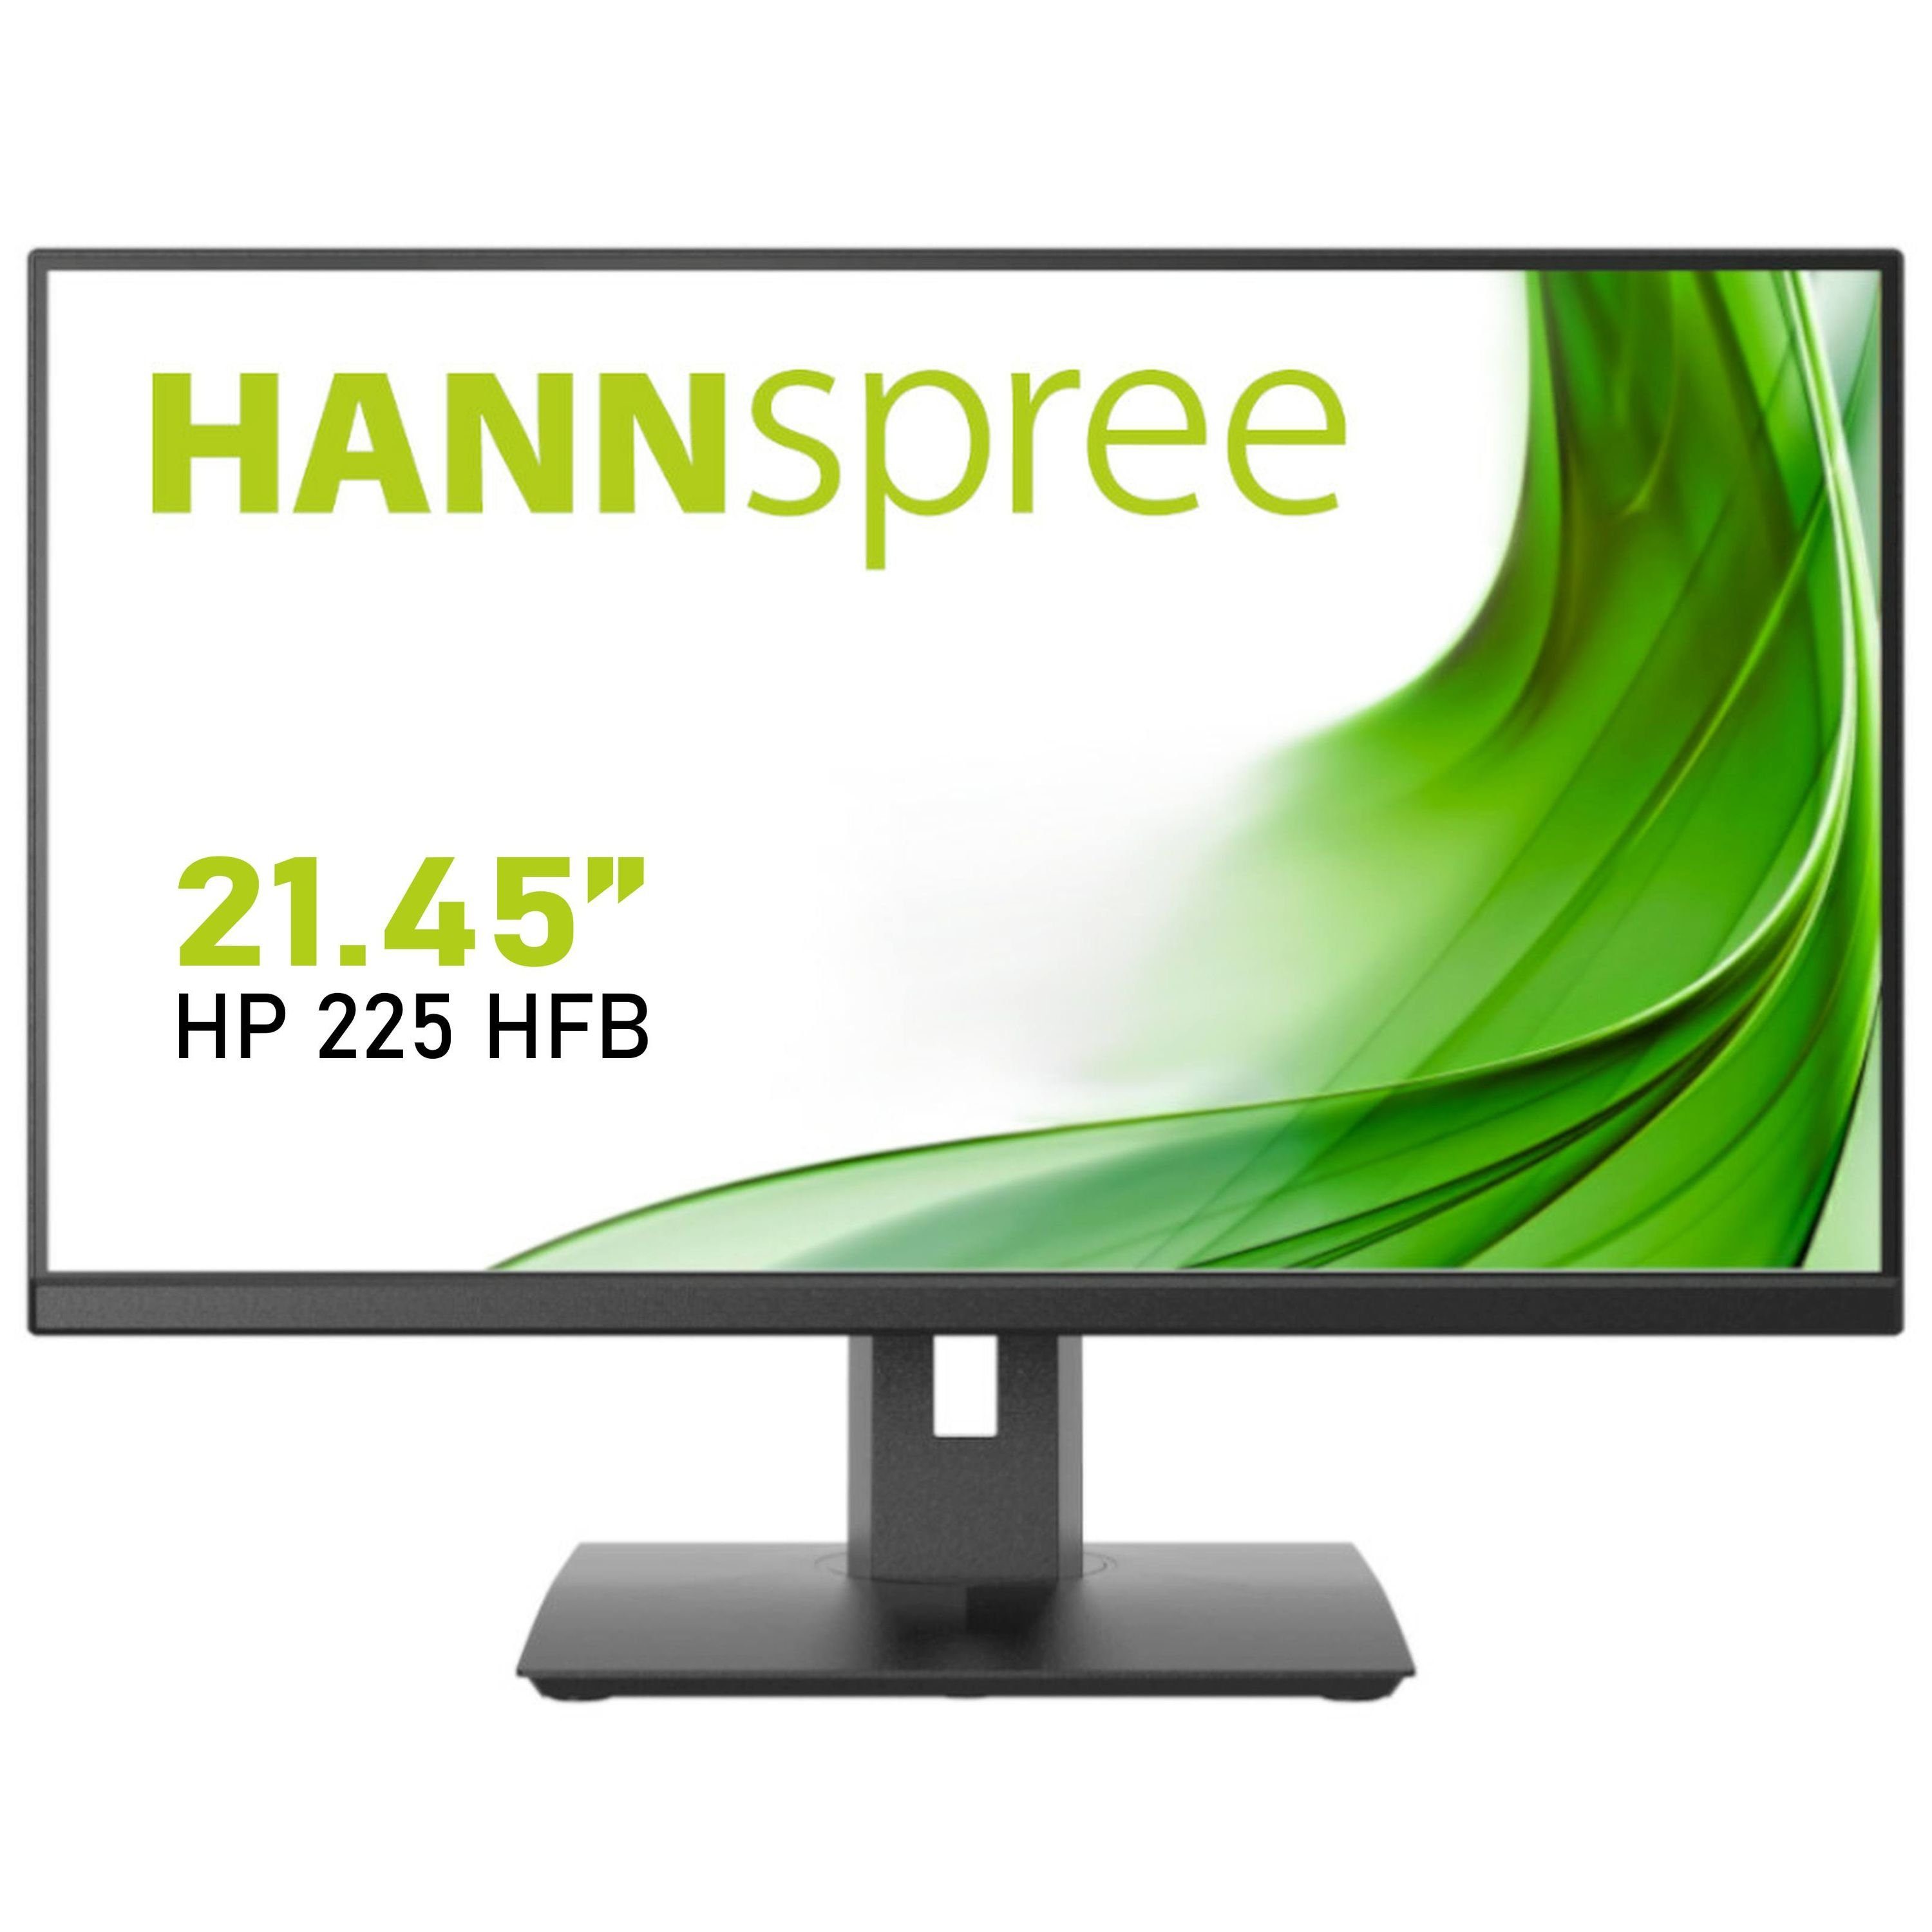 Hannspree HP 225 HFB LED-Monitor